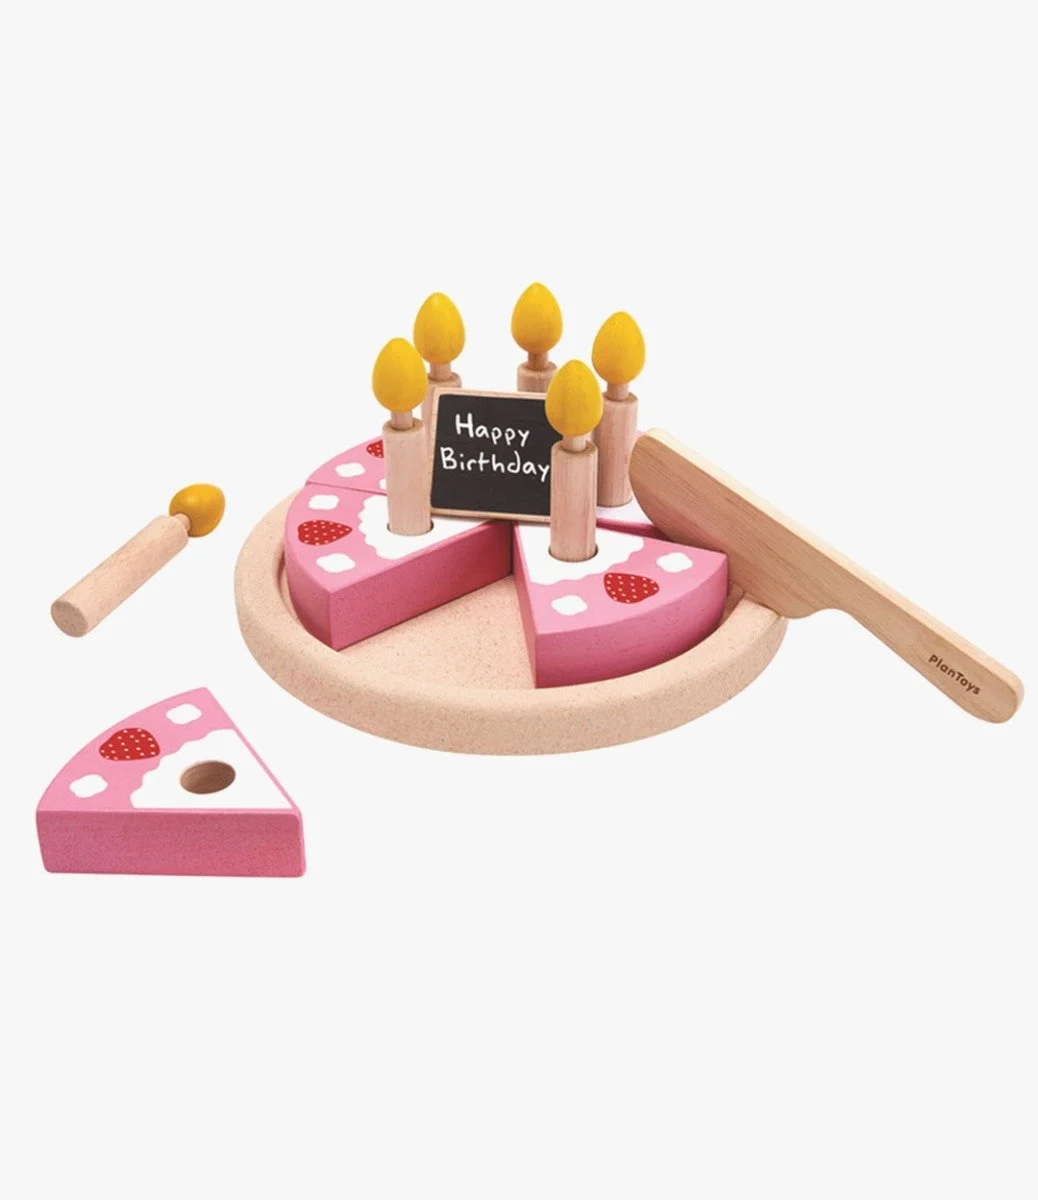 Birthday Cake Set By Plan Toys